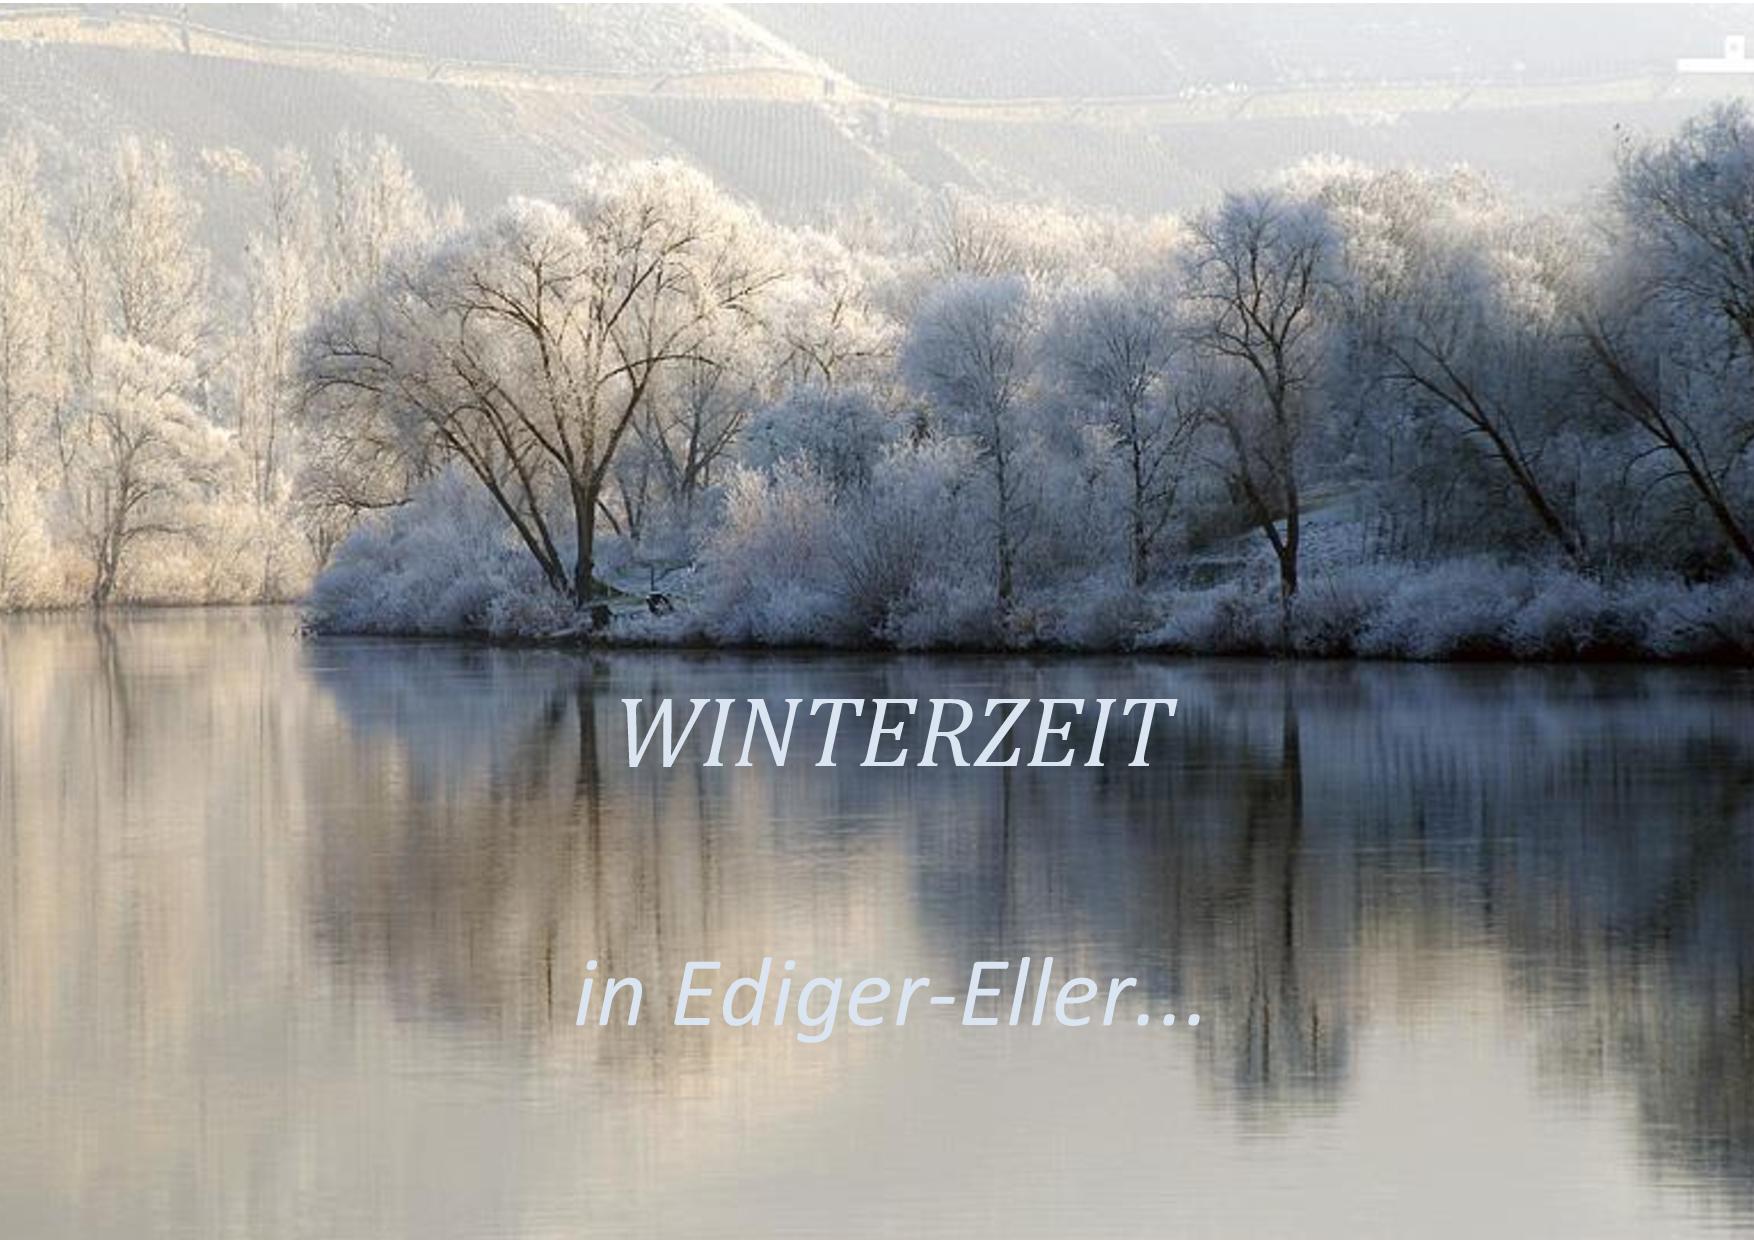 Winterzeit in Ediger-Eller 2020 2021